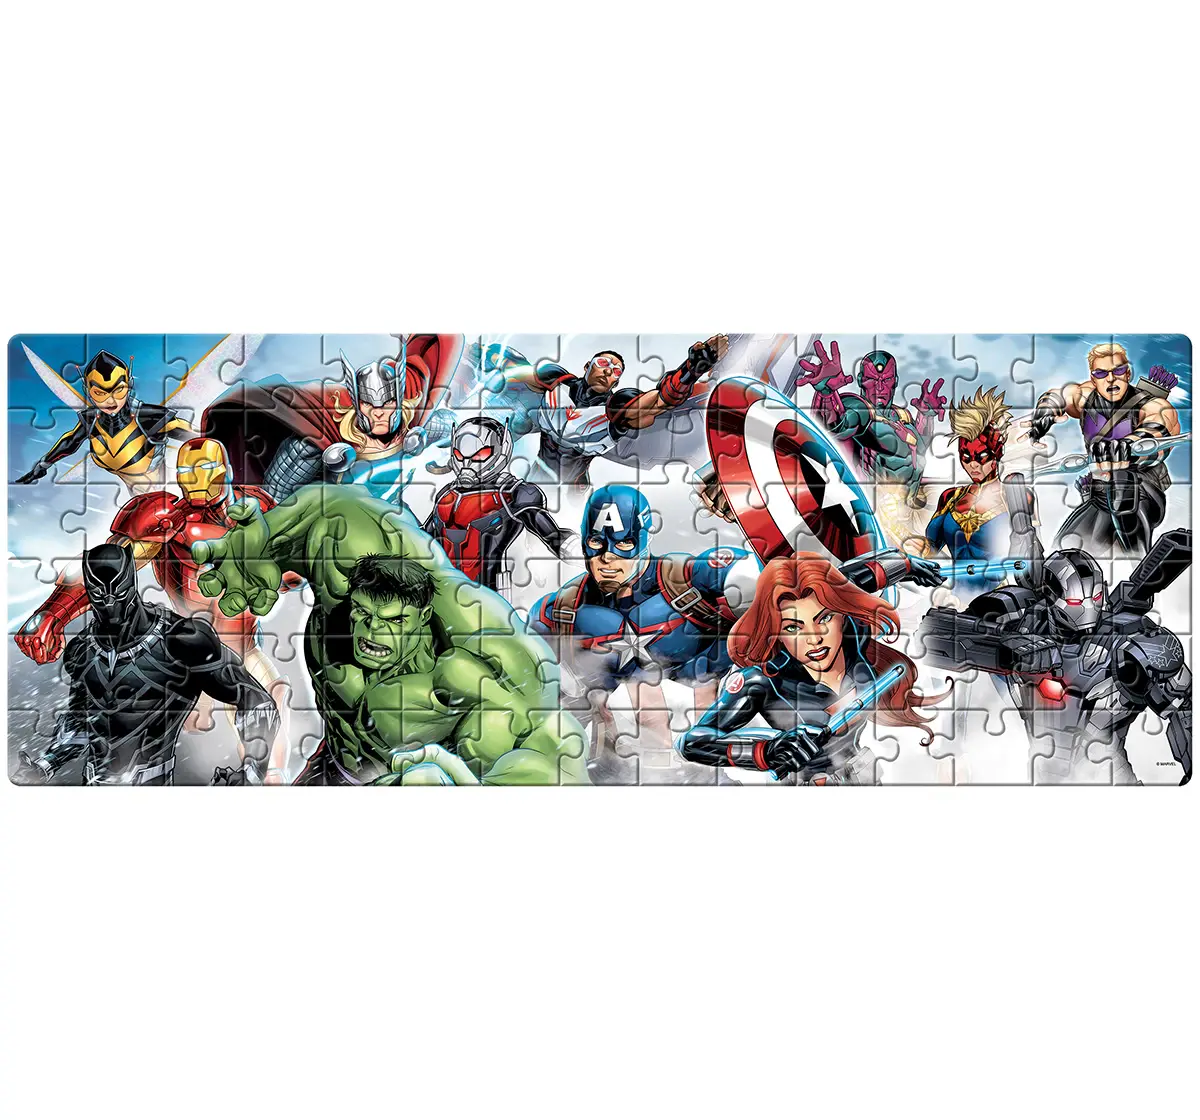 Frank Marvel Avengers Panorama Jigsaw Puzzle (90 Pcs), 6Y+